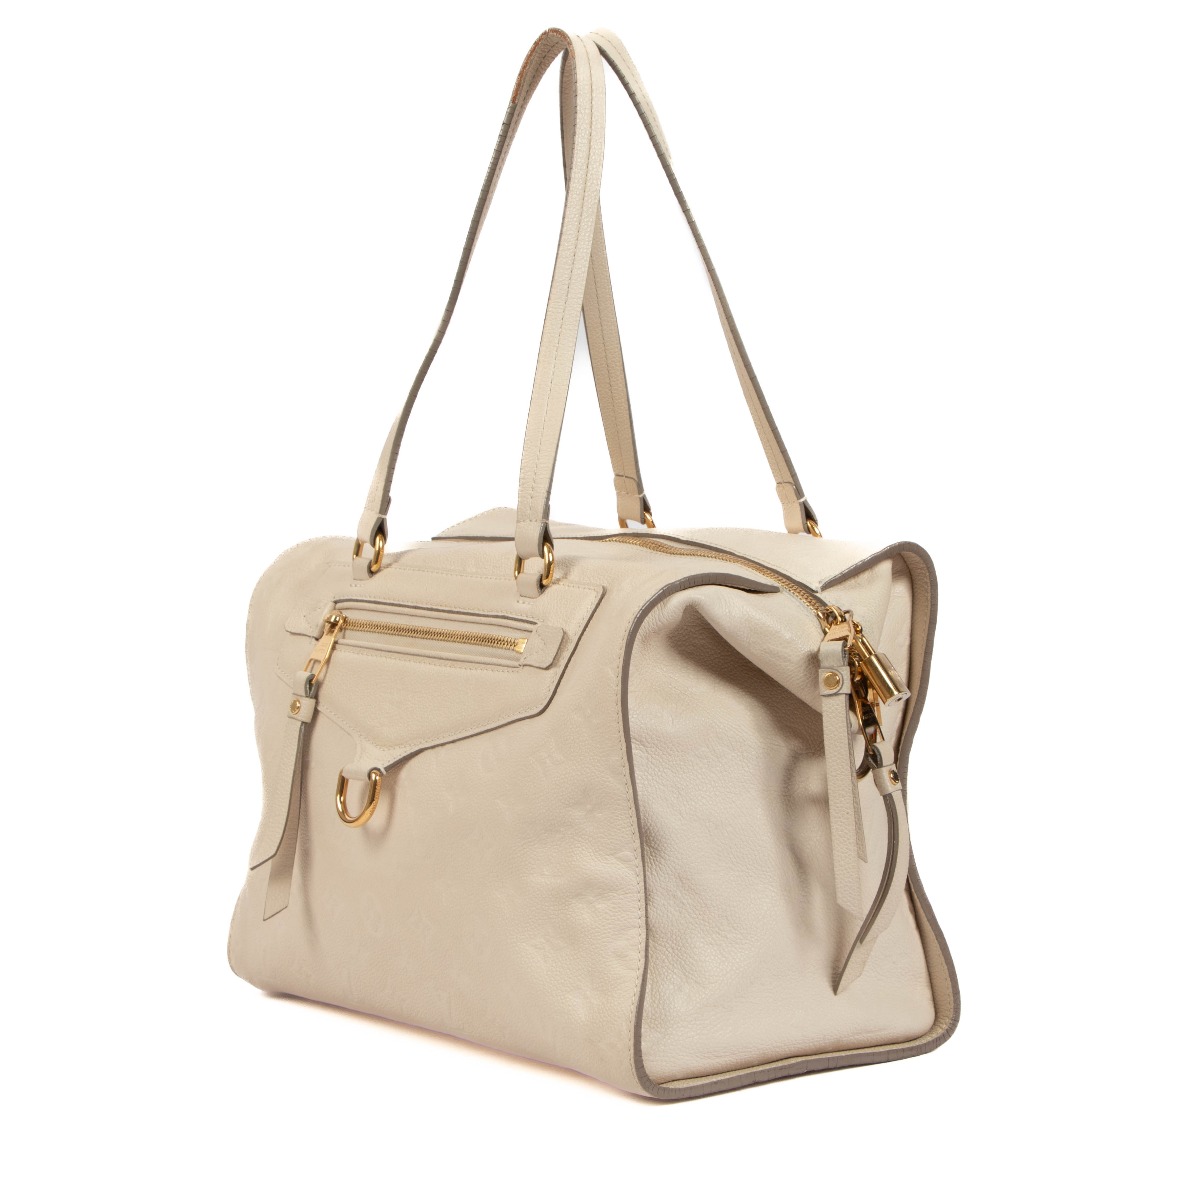 New purchase reveal! Louis Vuitton Empreinte Lumineuse PM in Ombre handbag  